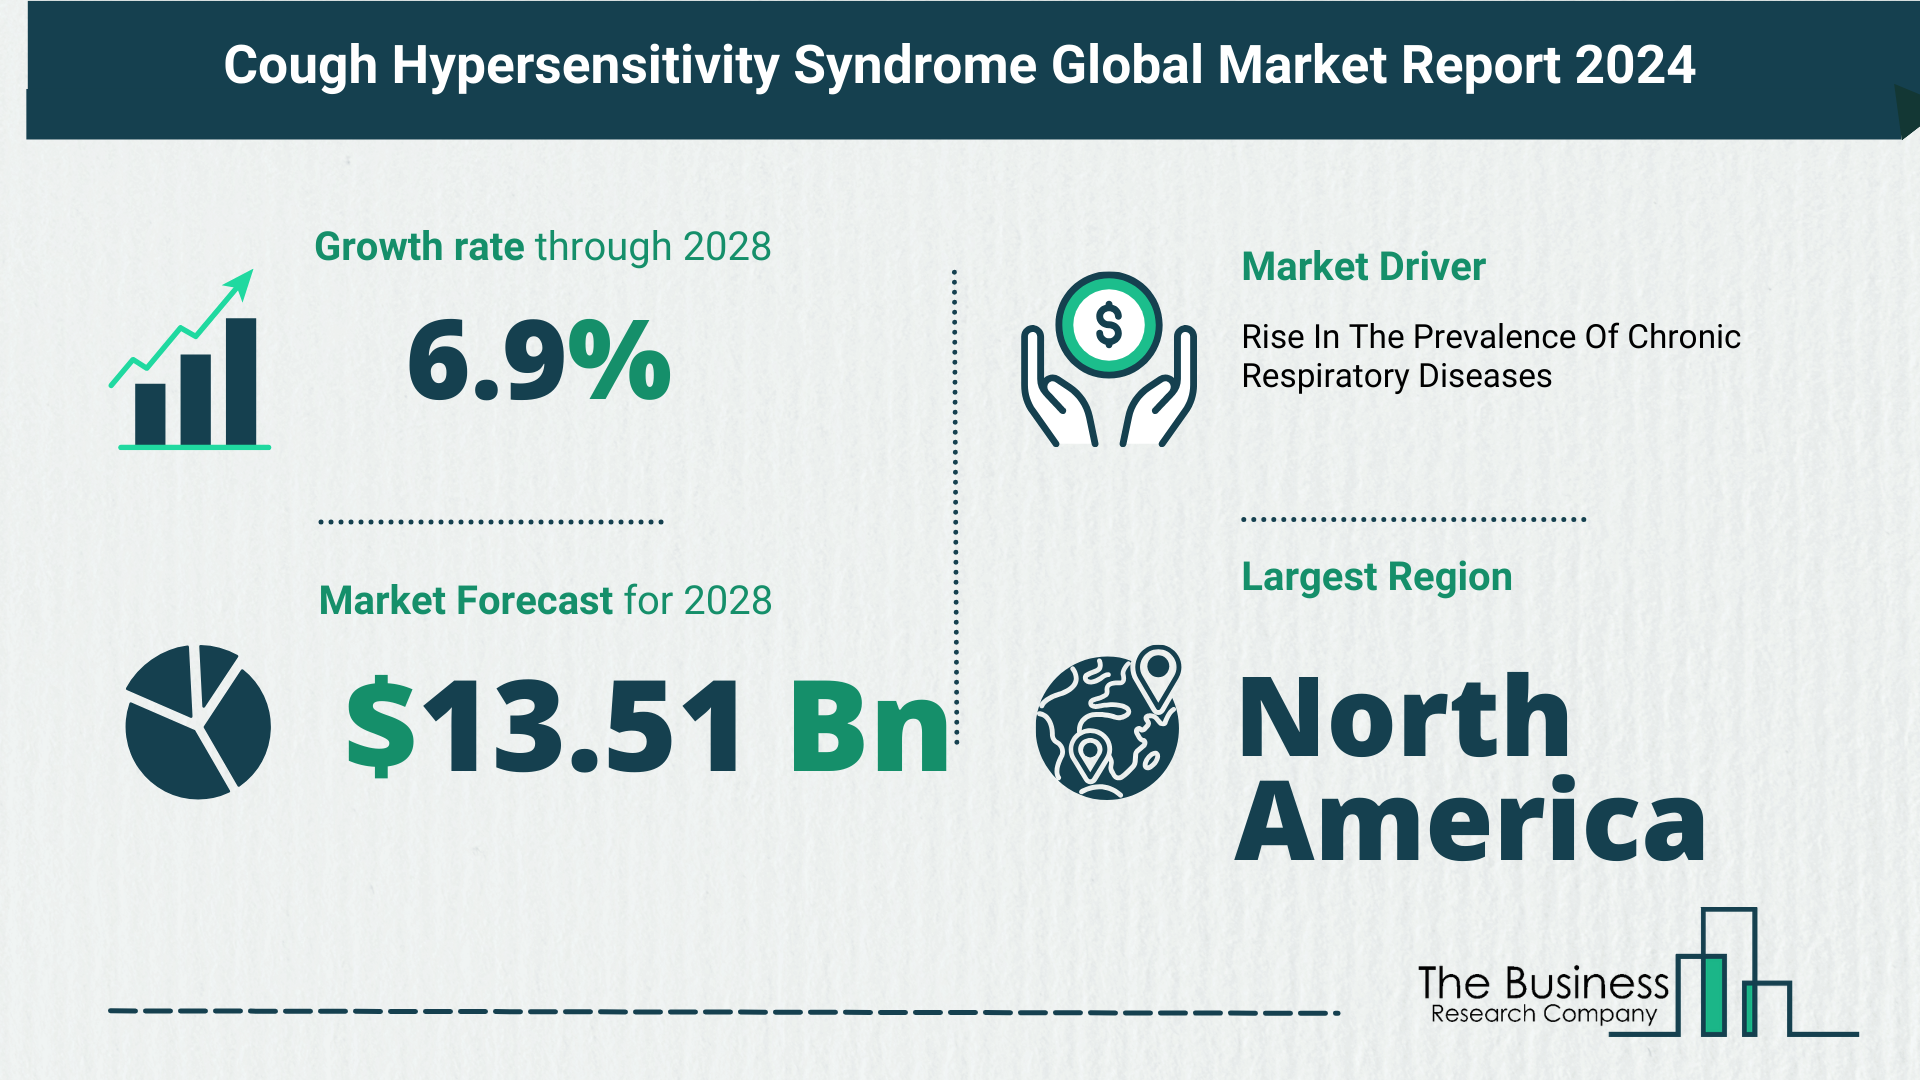 Global Cough Hypersensitivity Syndrome Market